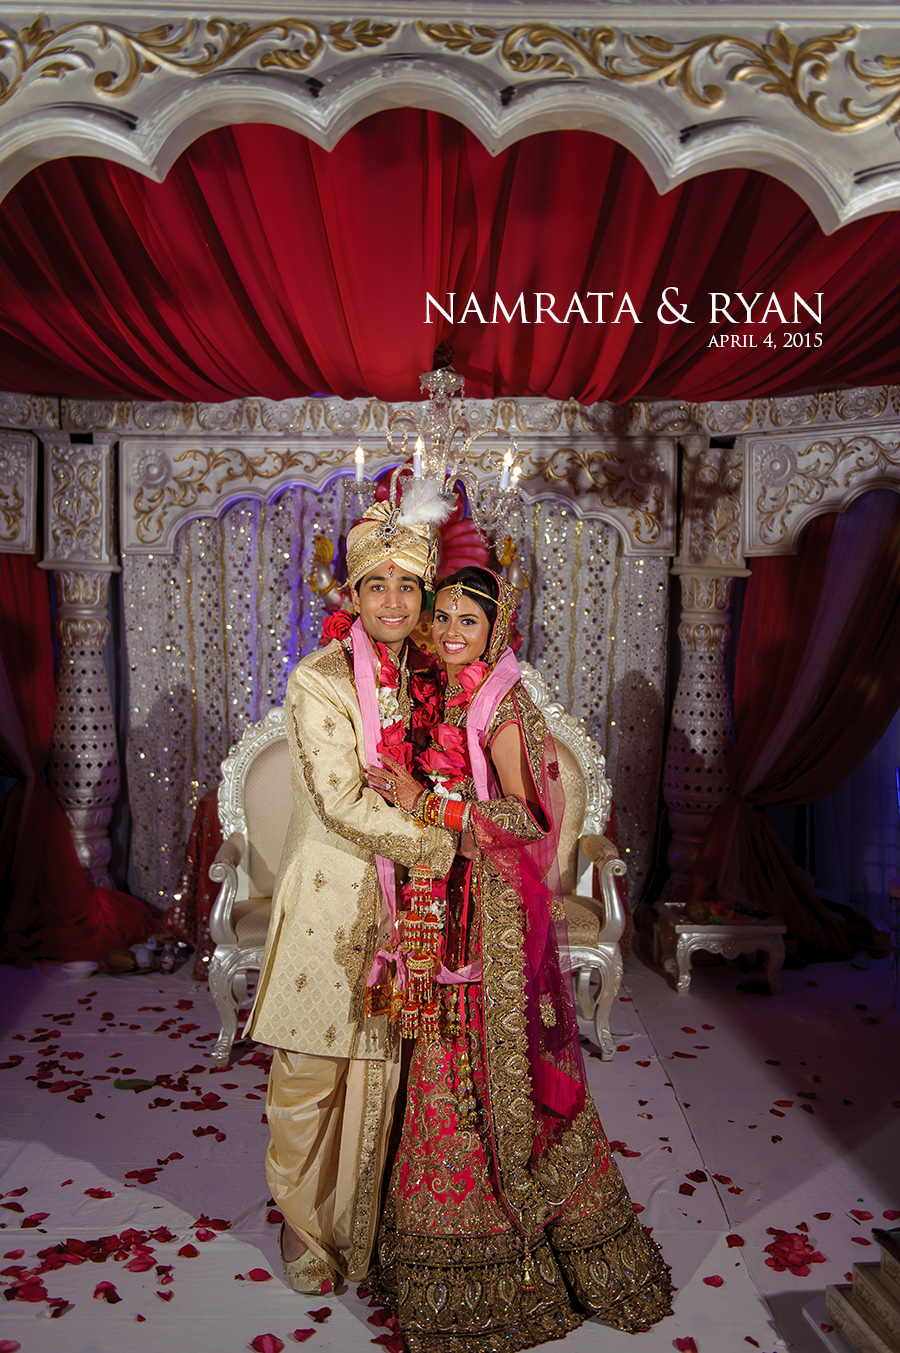 Namrata & Ryan